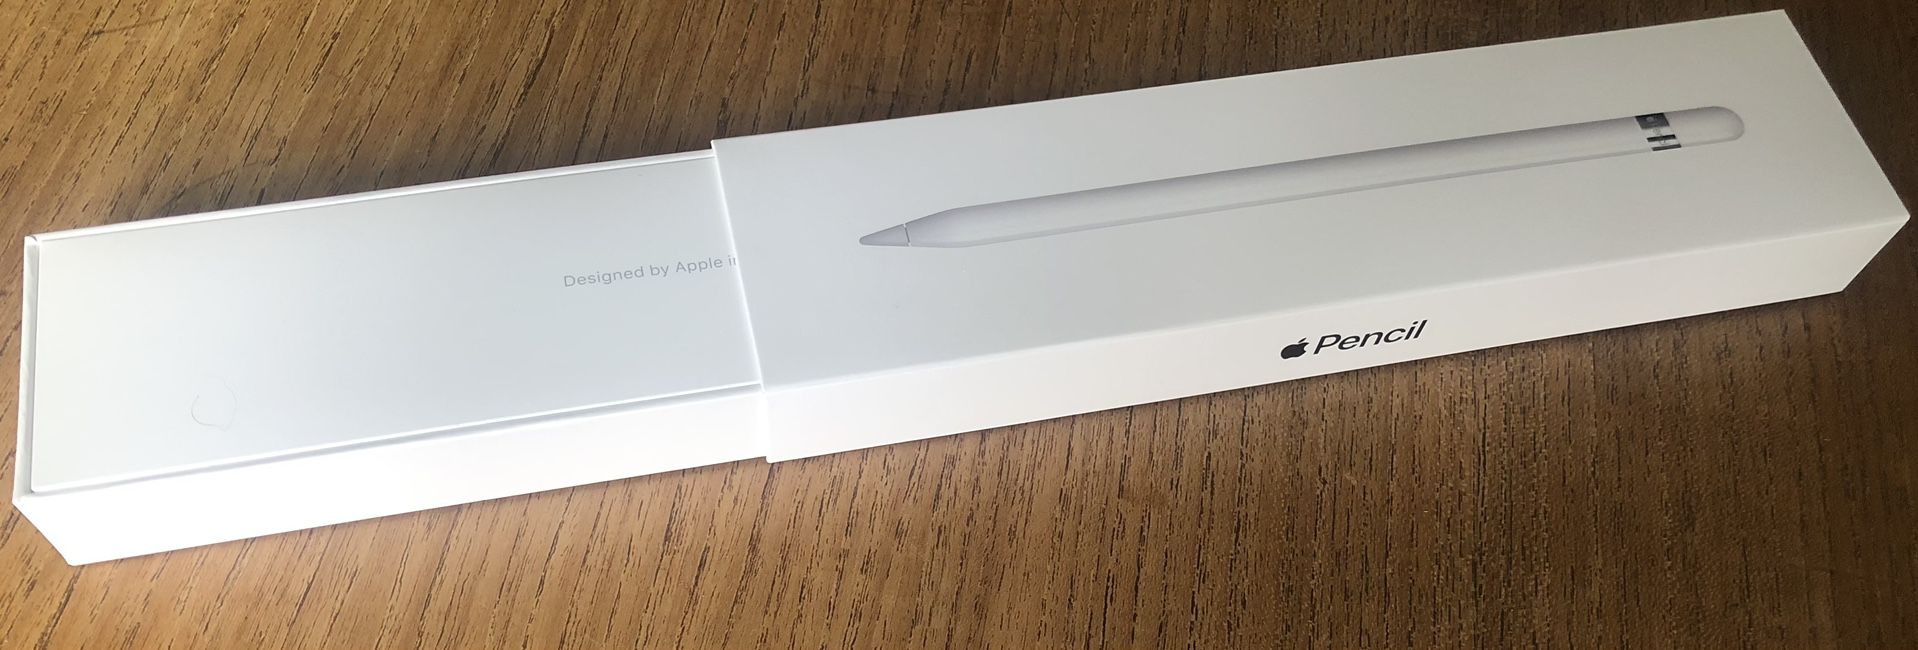 Apple Pencil - New